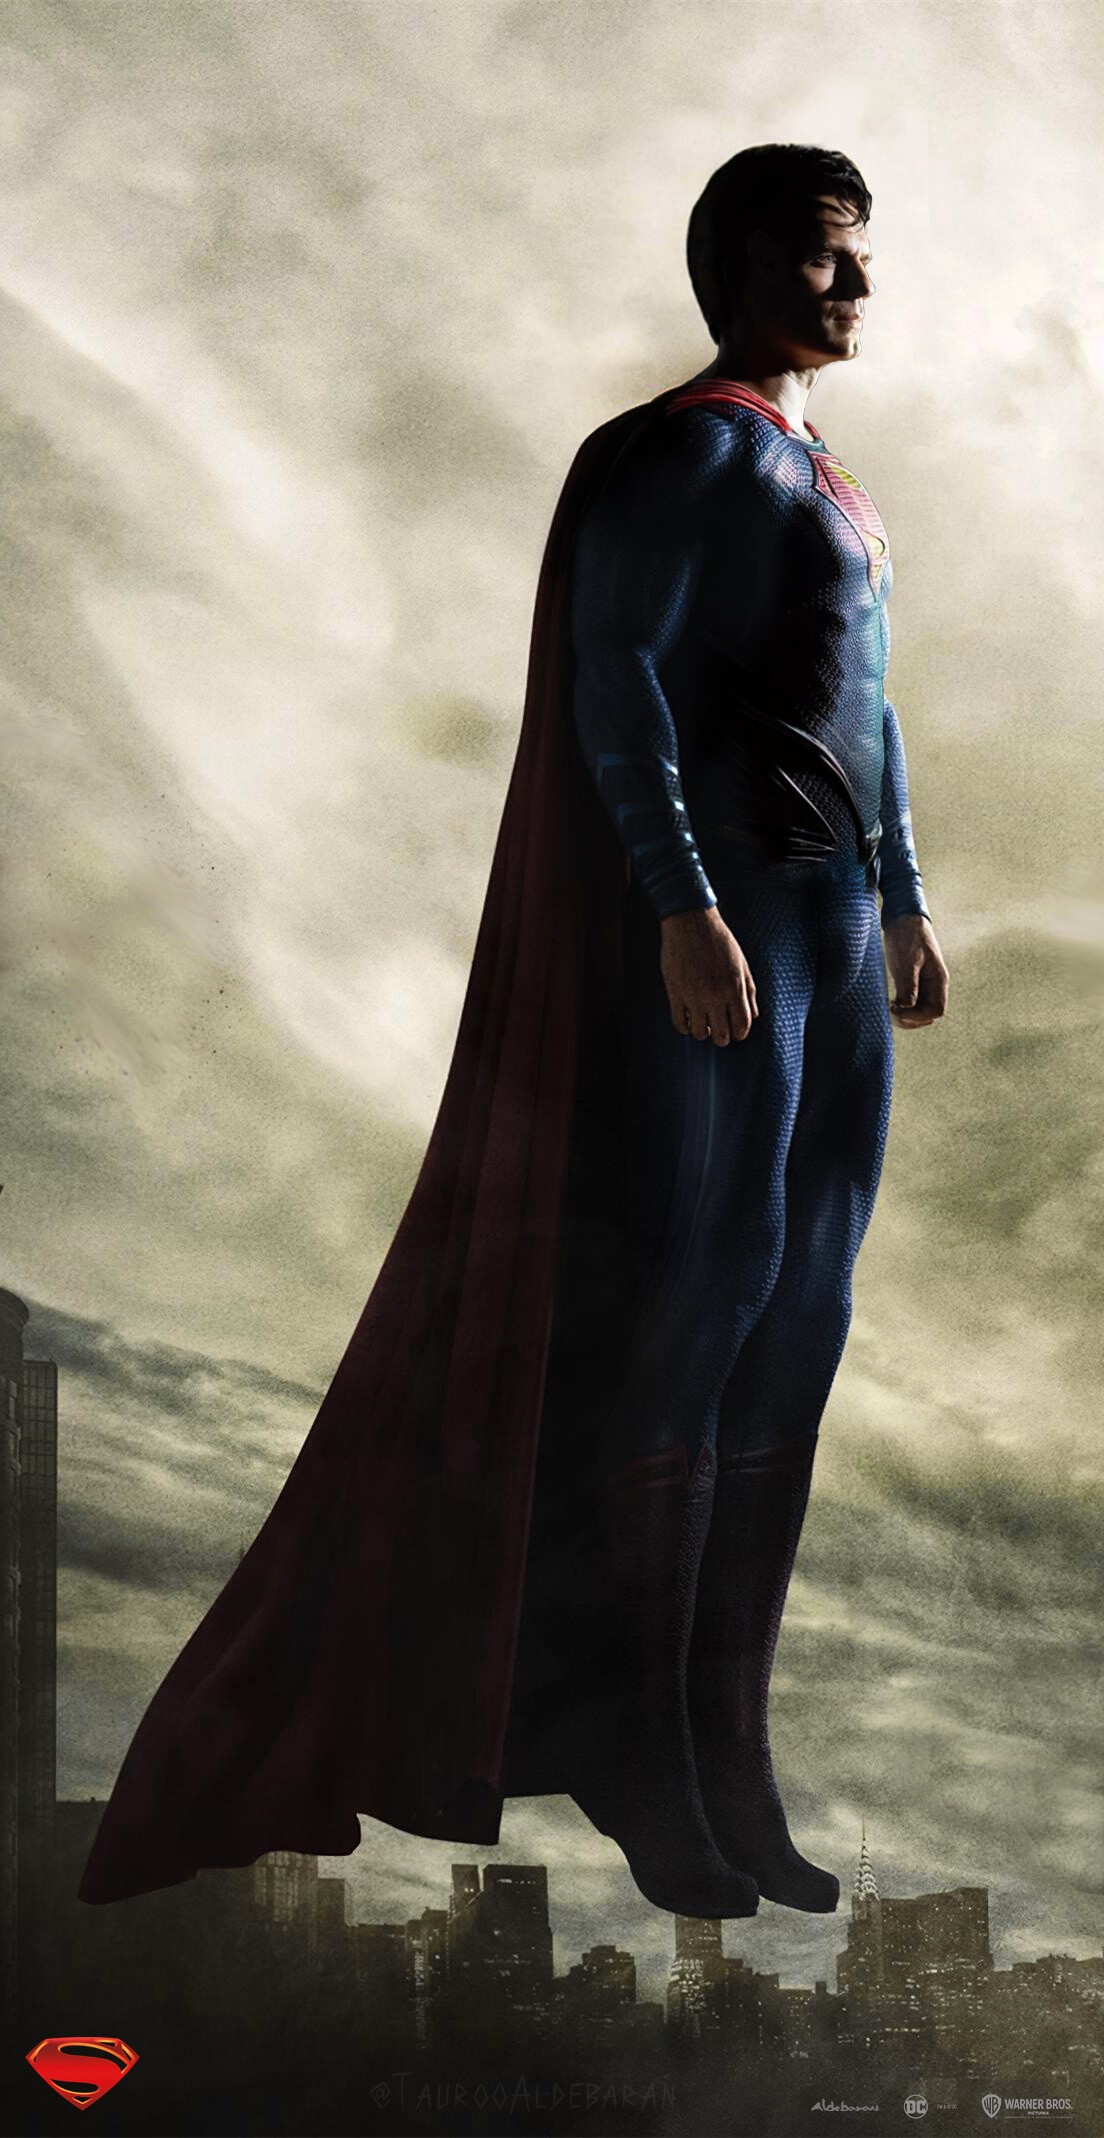 Superman Returns: Henry Cavill Is in Development on 'Man of Steel